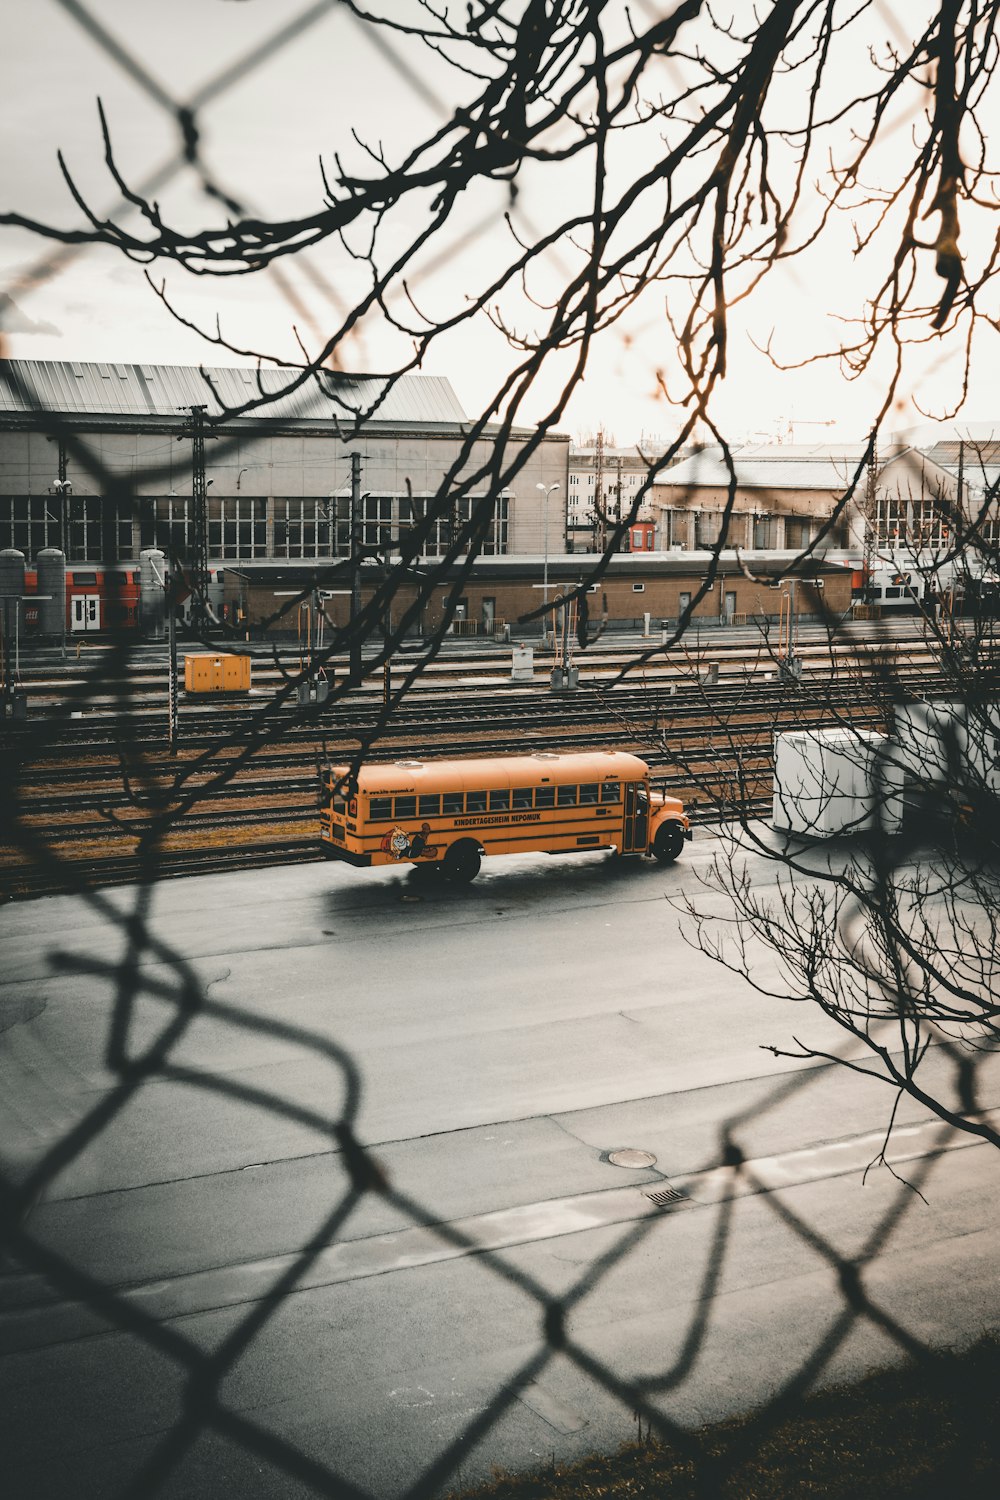 yellow school bus near buildings